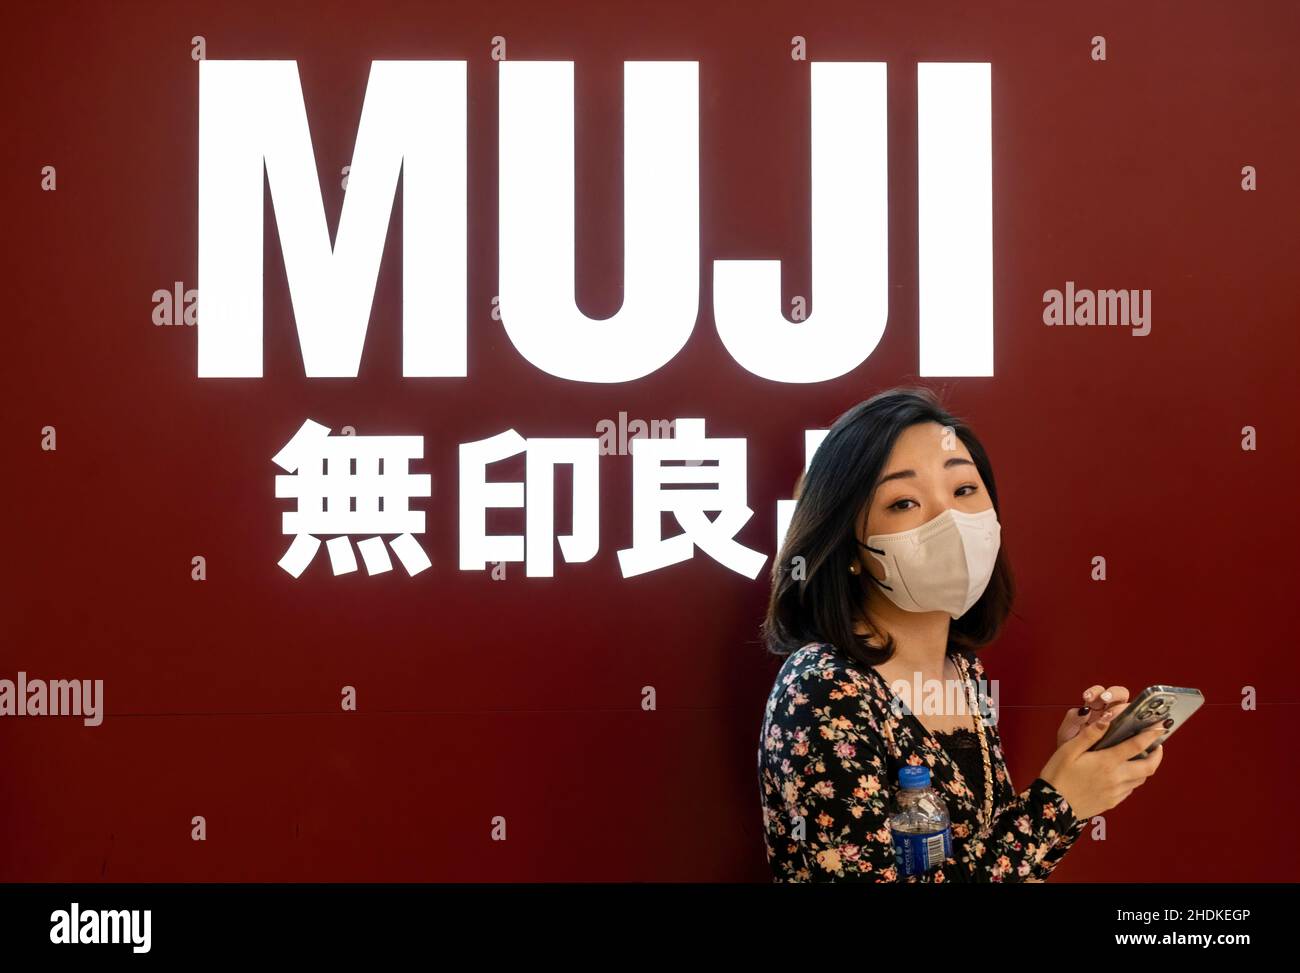 Muji Underwear - Best Price in Singapore - Jan 2024